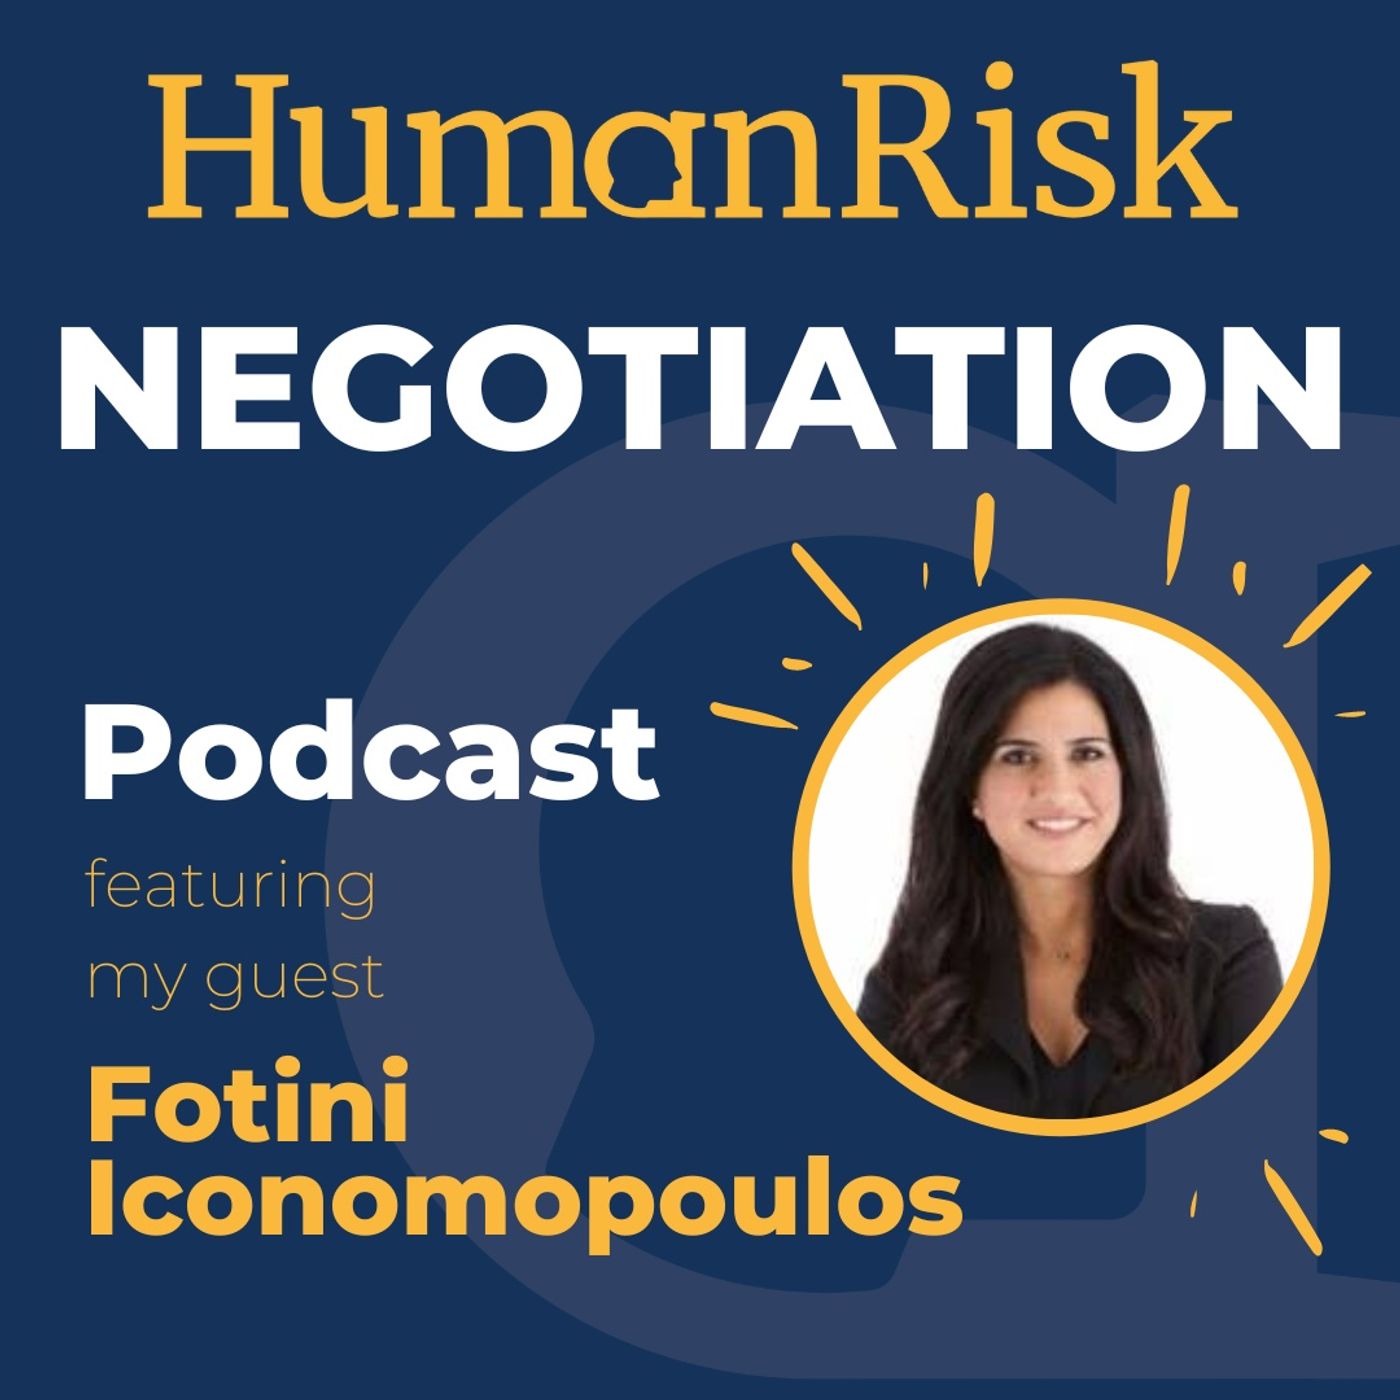 Fotini Iconomopoulos on Negotiation